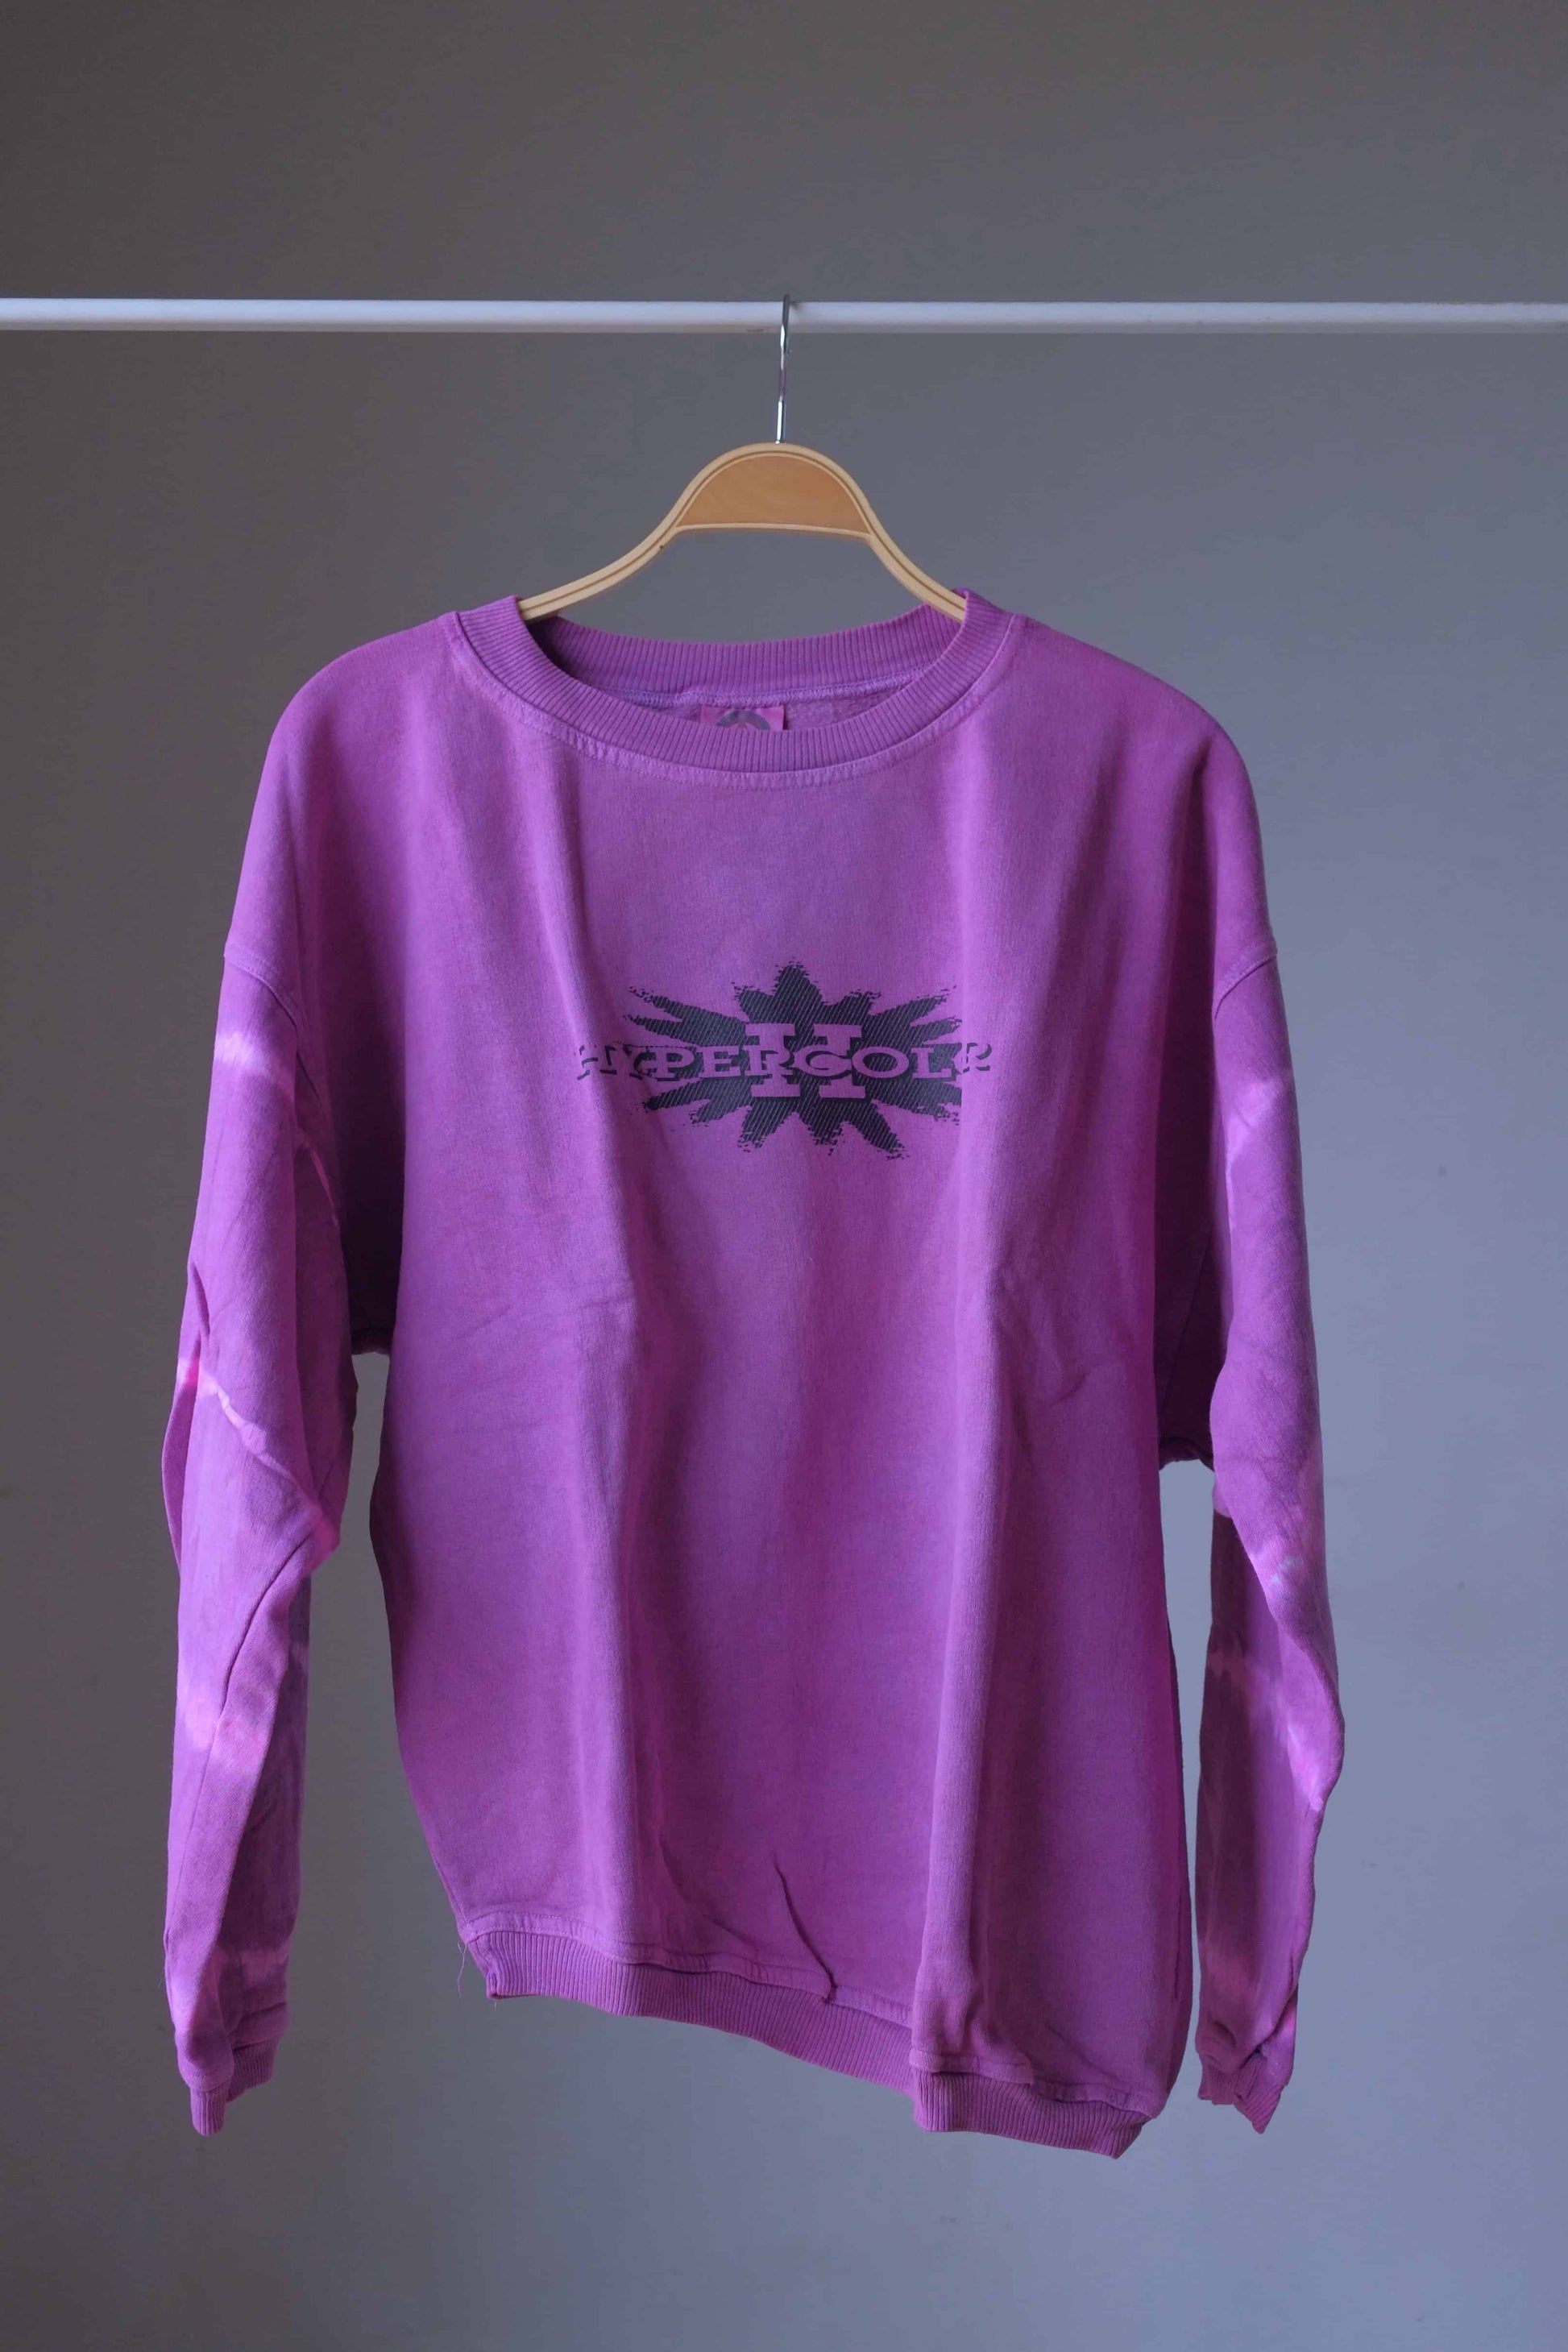 90's Hypercolor Color Changing Sweatshirt purple color